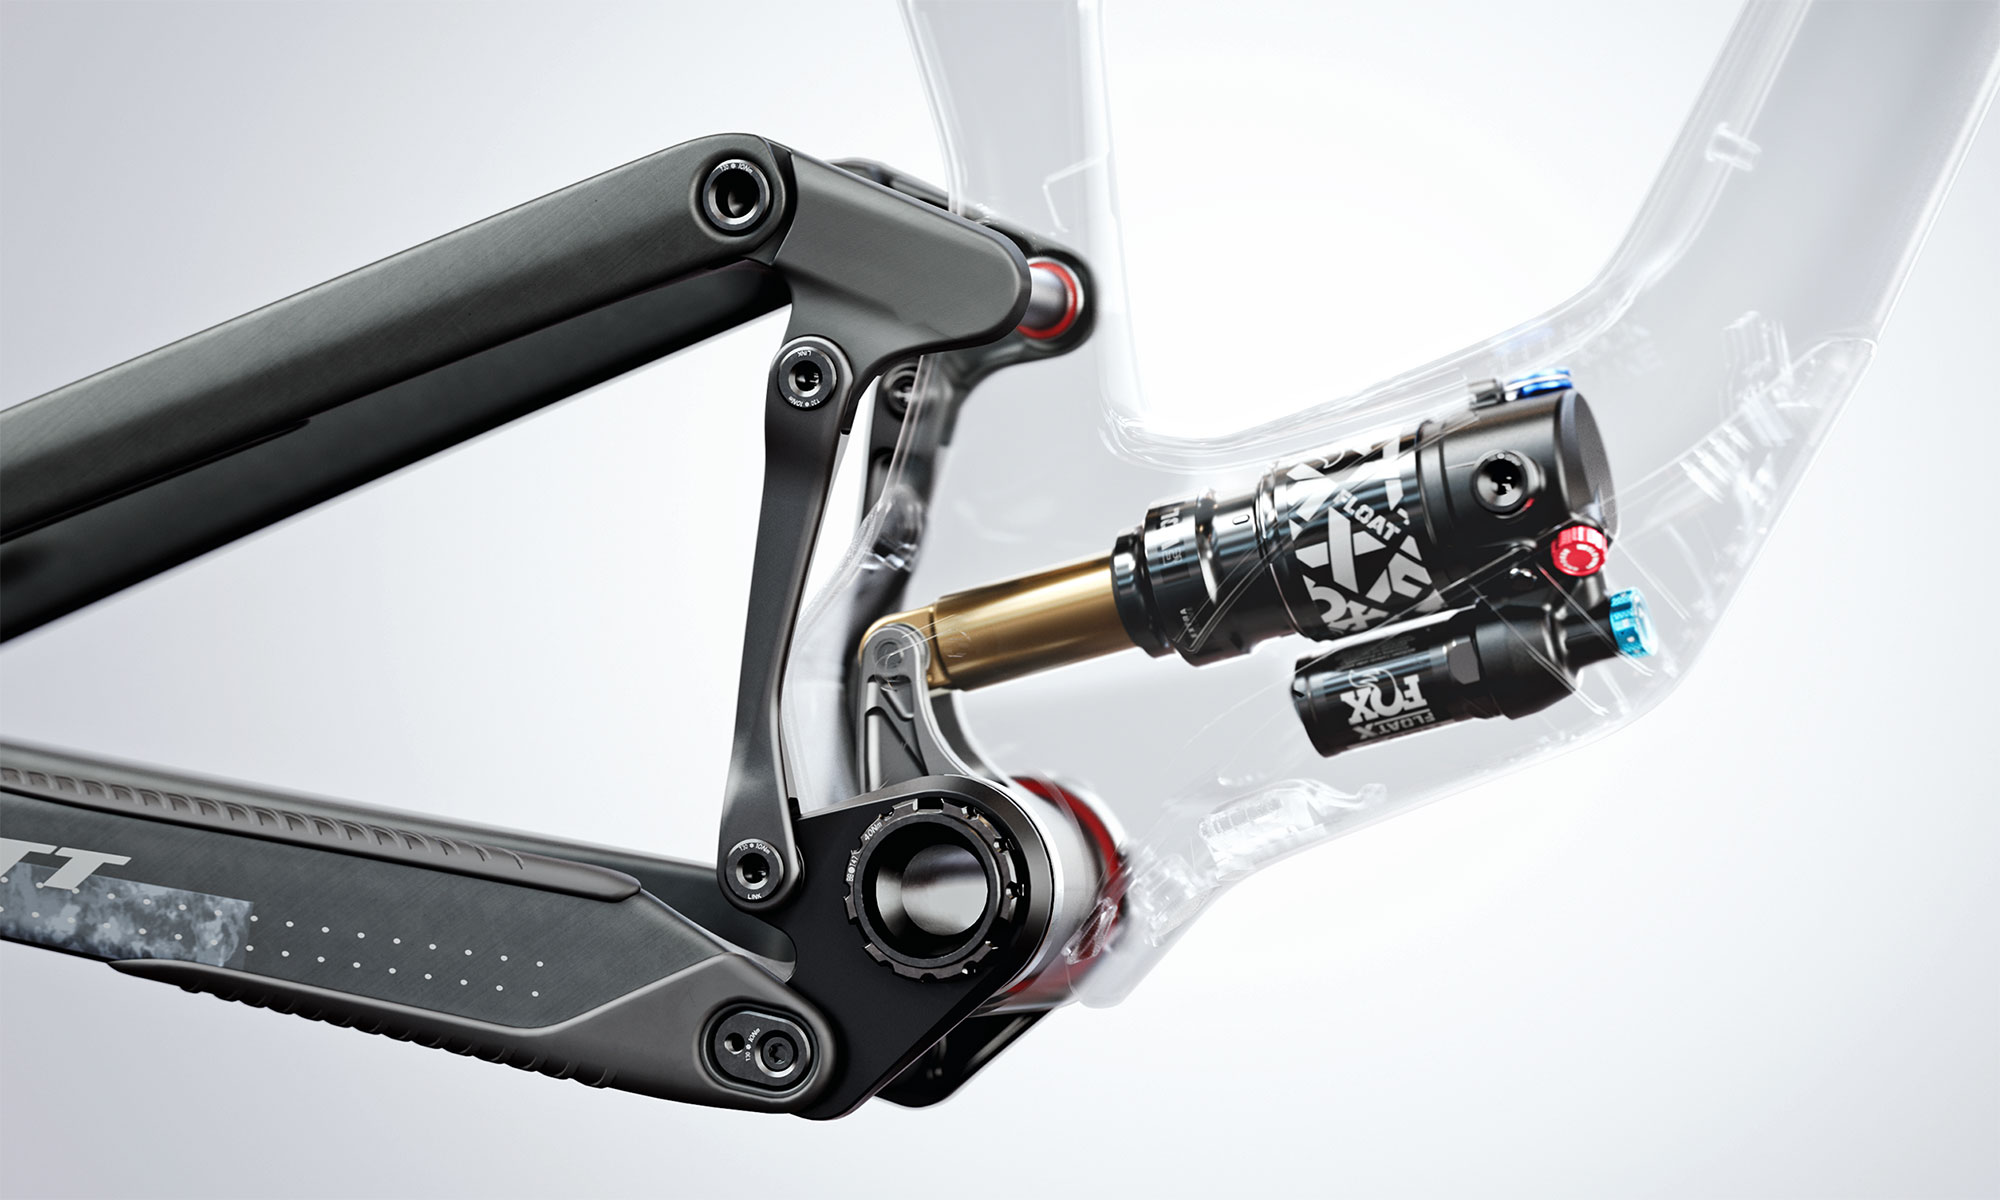 Scott Ransom 170mm 6-bar carbon freeride enduro mountain bike, Bold-style hidden shock inside